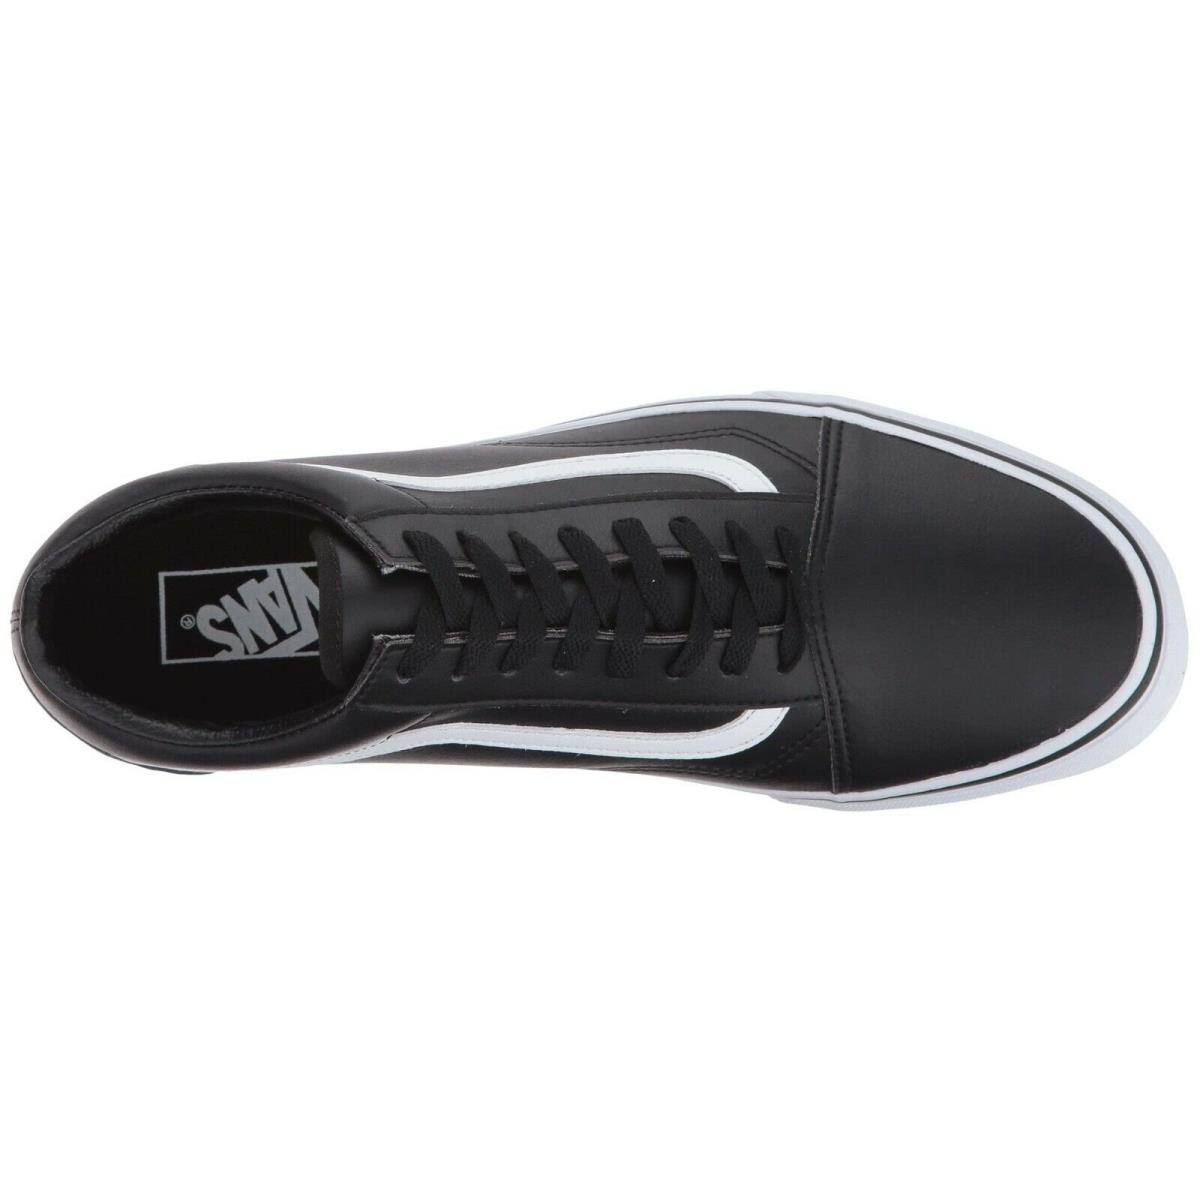 Vans Old Skool Comfycush Black/ White Leather | 071236813108 - Vans shoes  Old Skool ComfyCush - Black/ White | SporTipTop